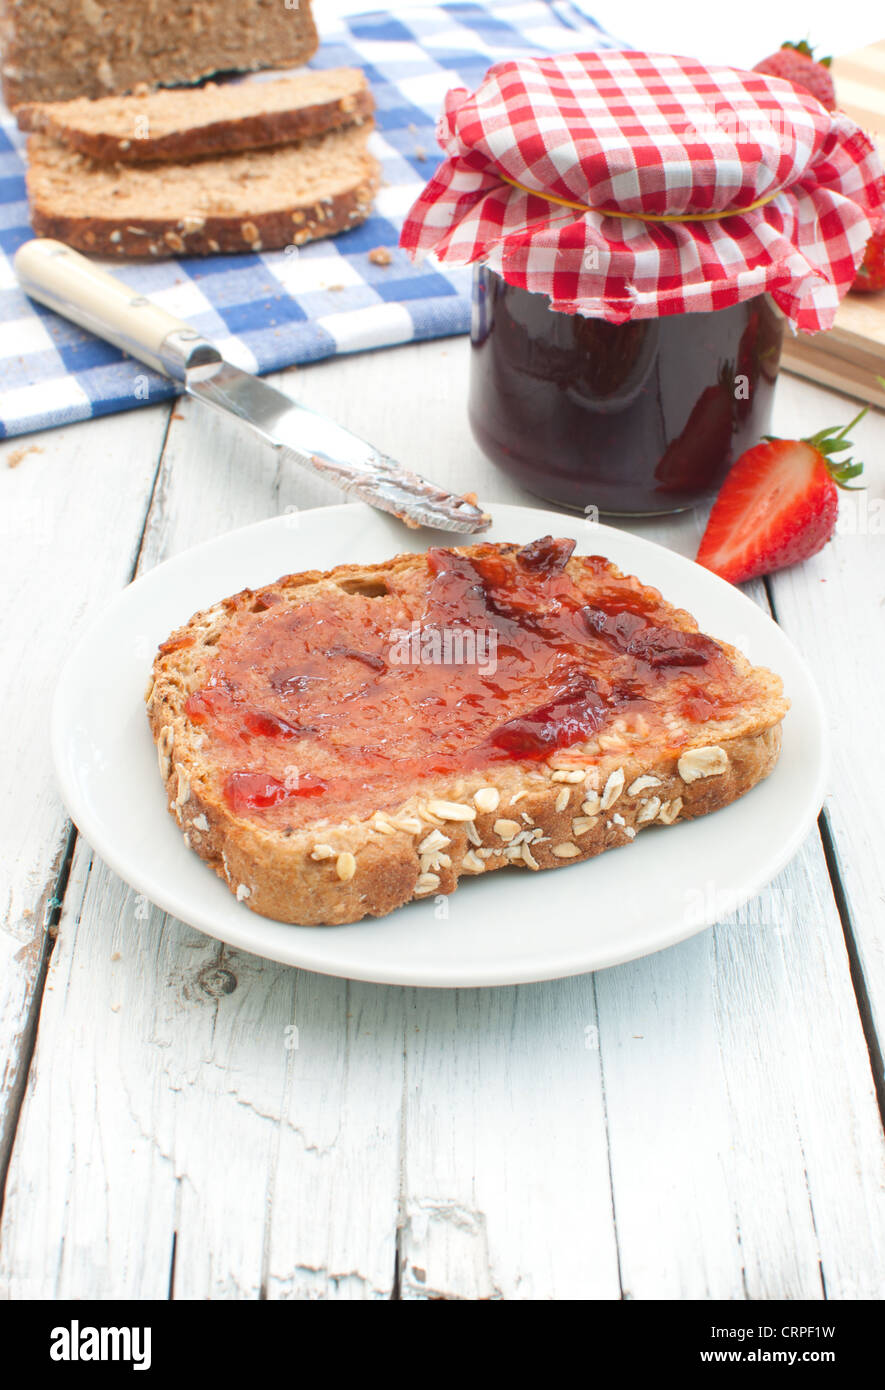 Traditional homemade jam and strawberries Stock Photo